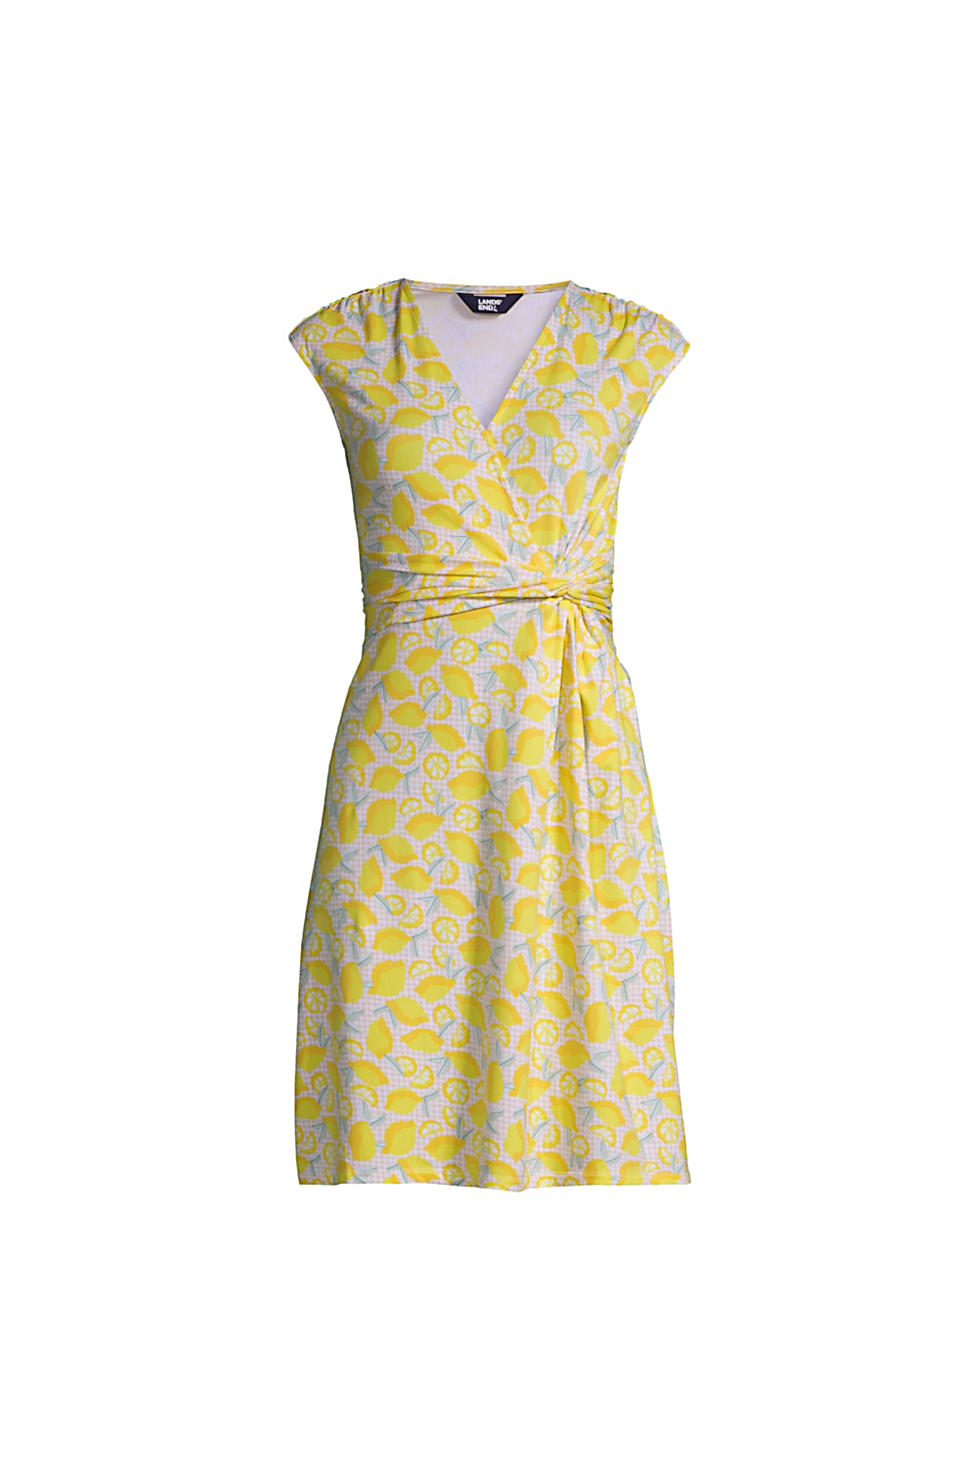 Lands End Women's Cotton Modal Jersey Surplice Fit and Flare Dress (Bright Sun Yellow Lemon Check)